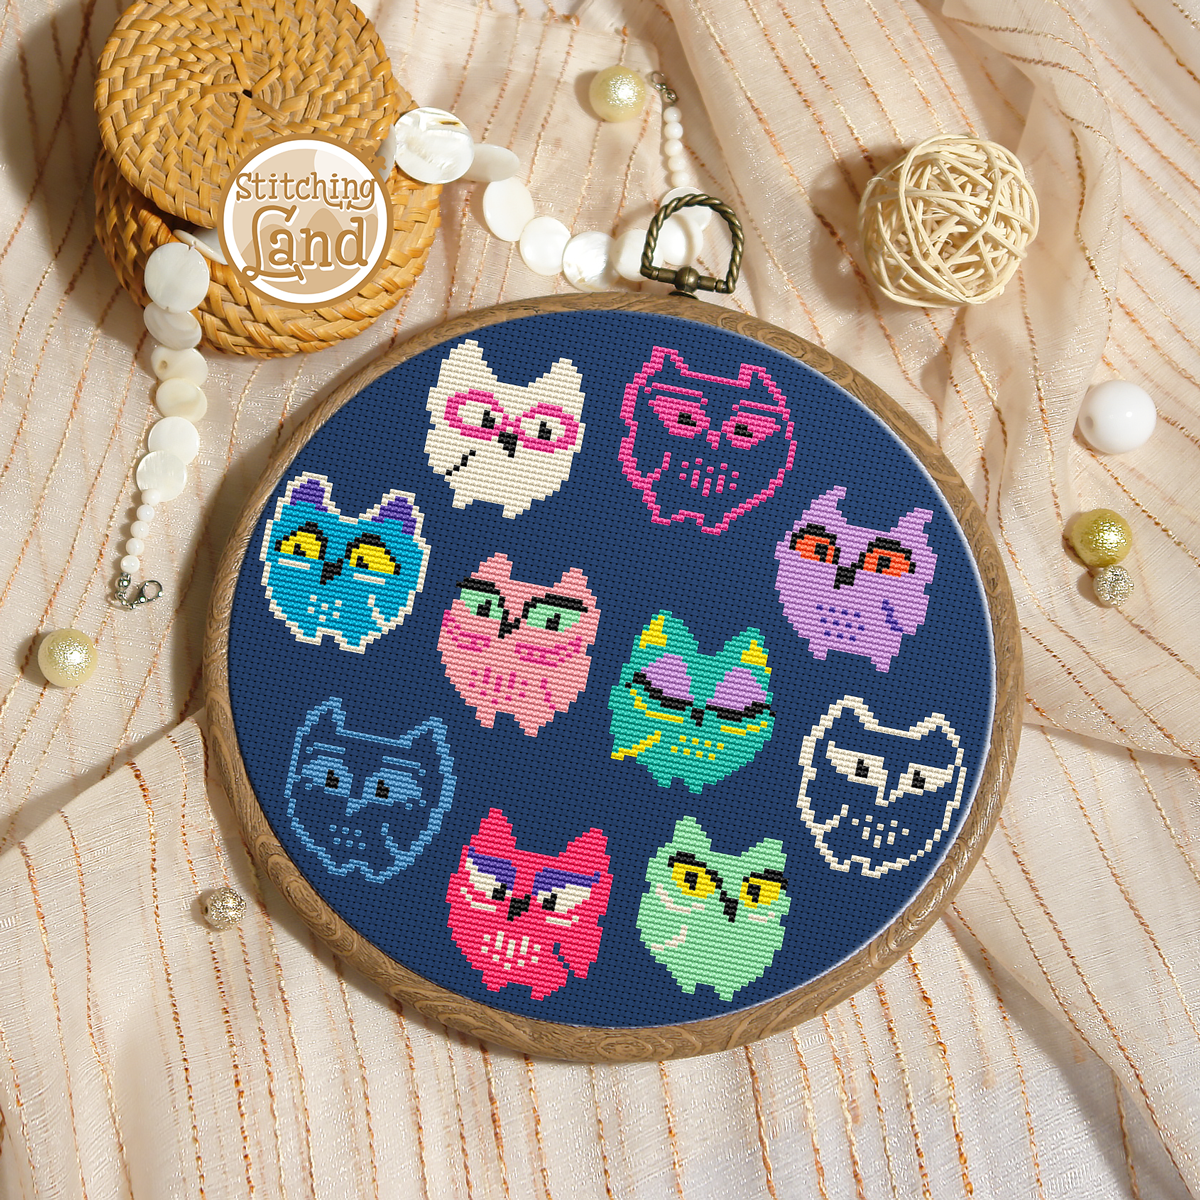 Owls Cross Stitch Pattern